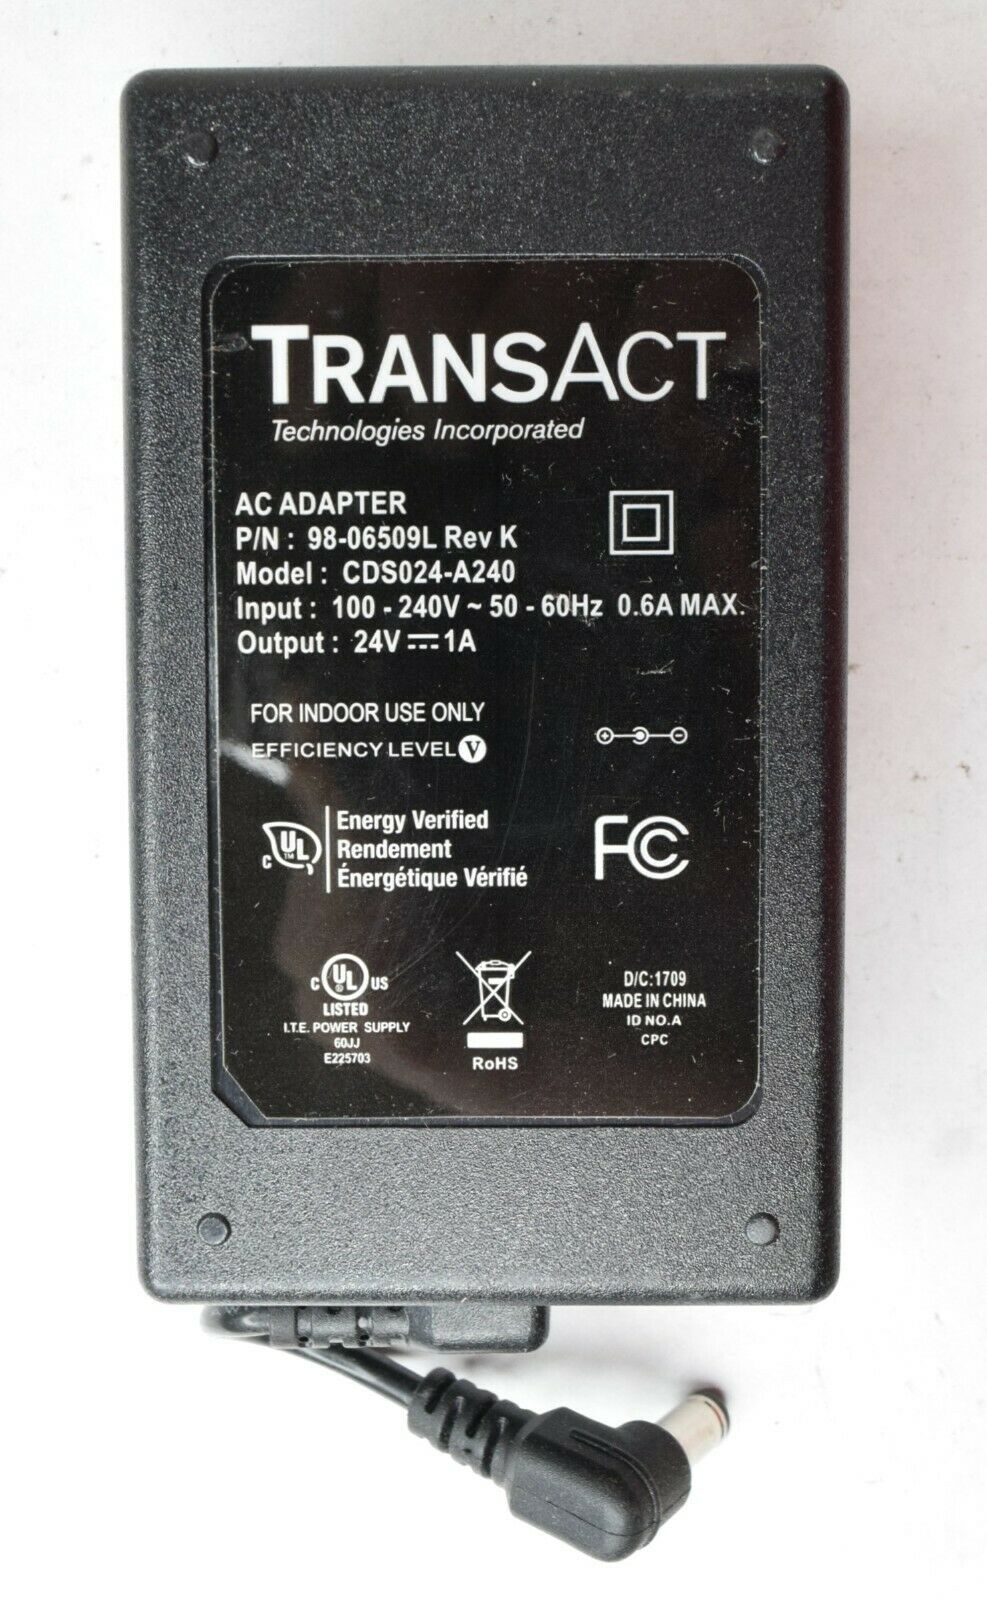 TransAct AC Adapter Power Supply Unit 98-06509L CDS024-A240 24V 1A tip:5.5*2.5mm Type: Adapter MPN: 98-06509L, CDS02